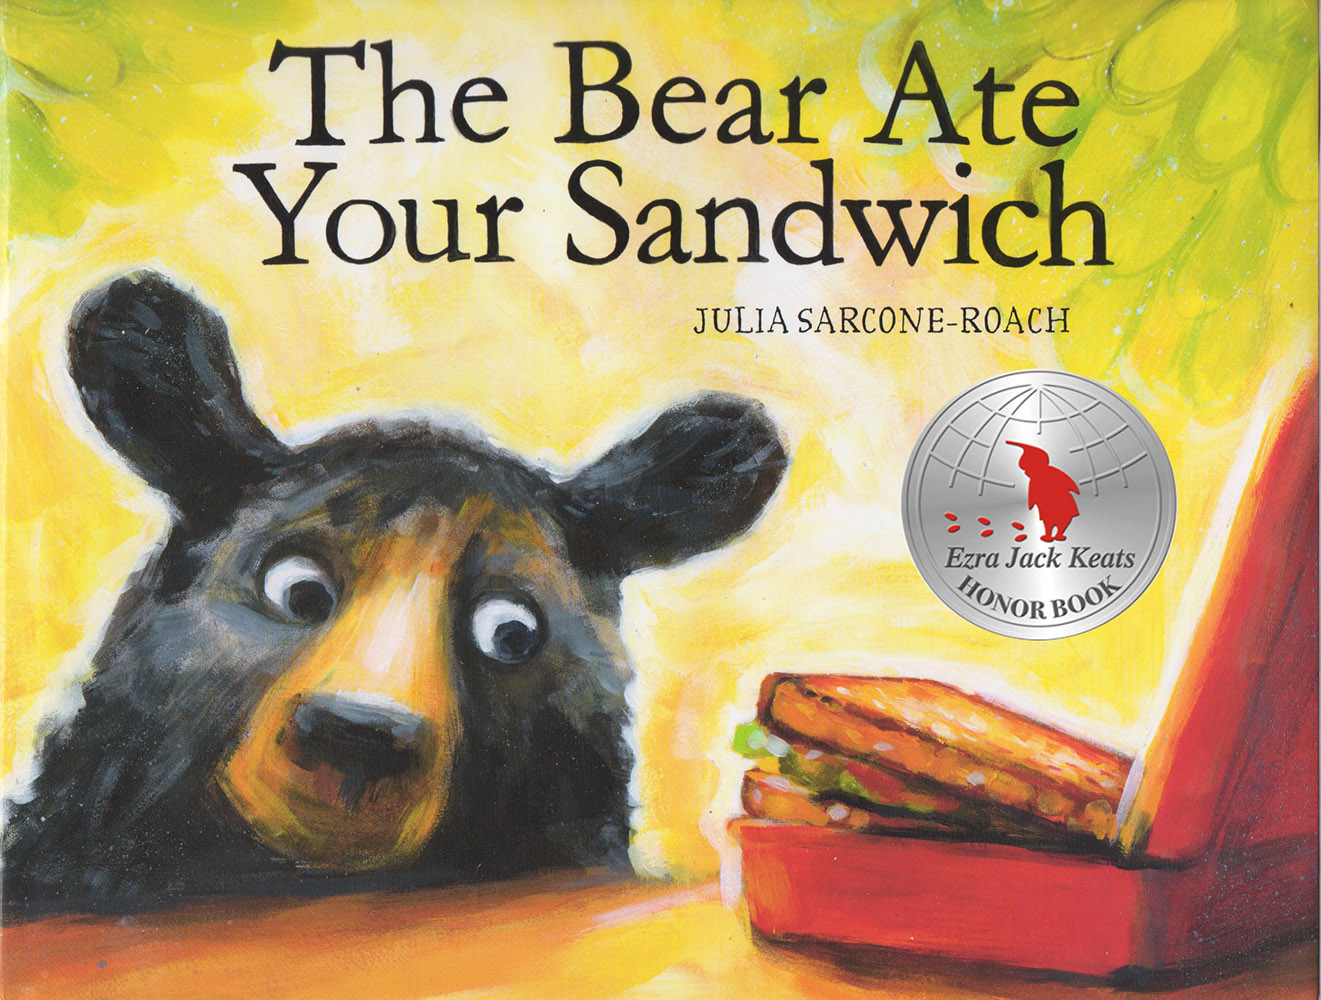 Sarcone-Roach, Julia 2015_01 - THE BEAR ATE YOUR SANDWICH - PB - RLM PR.jpg